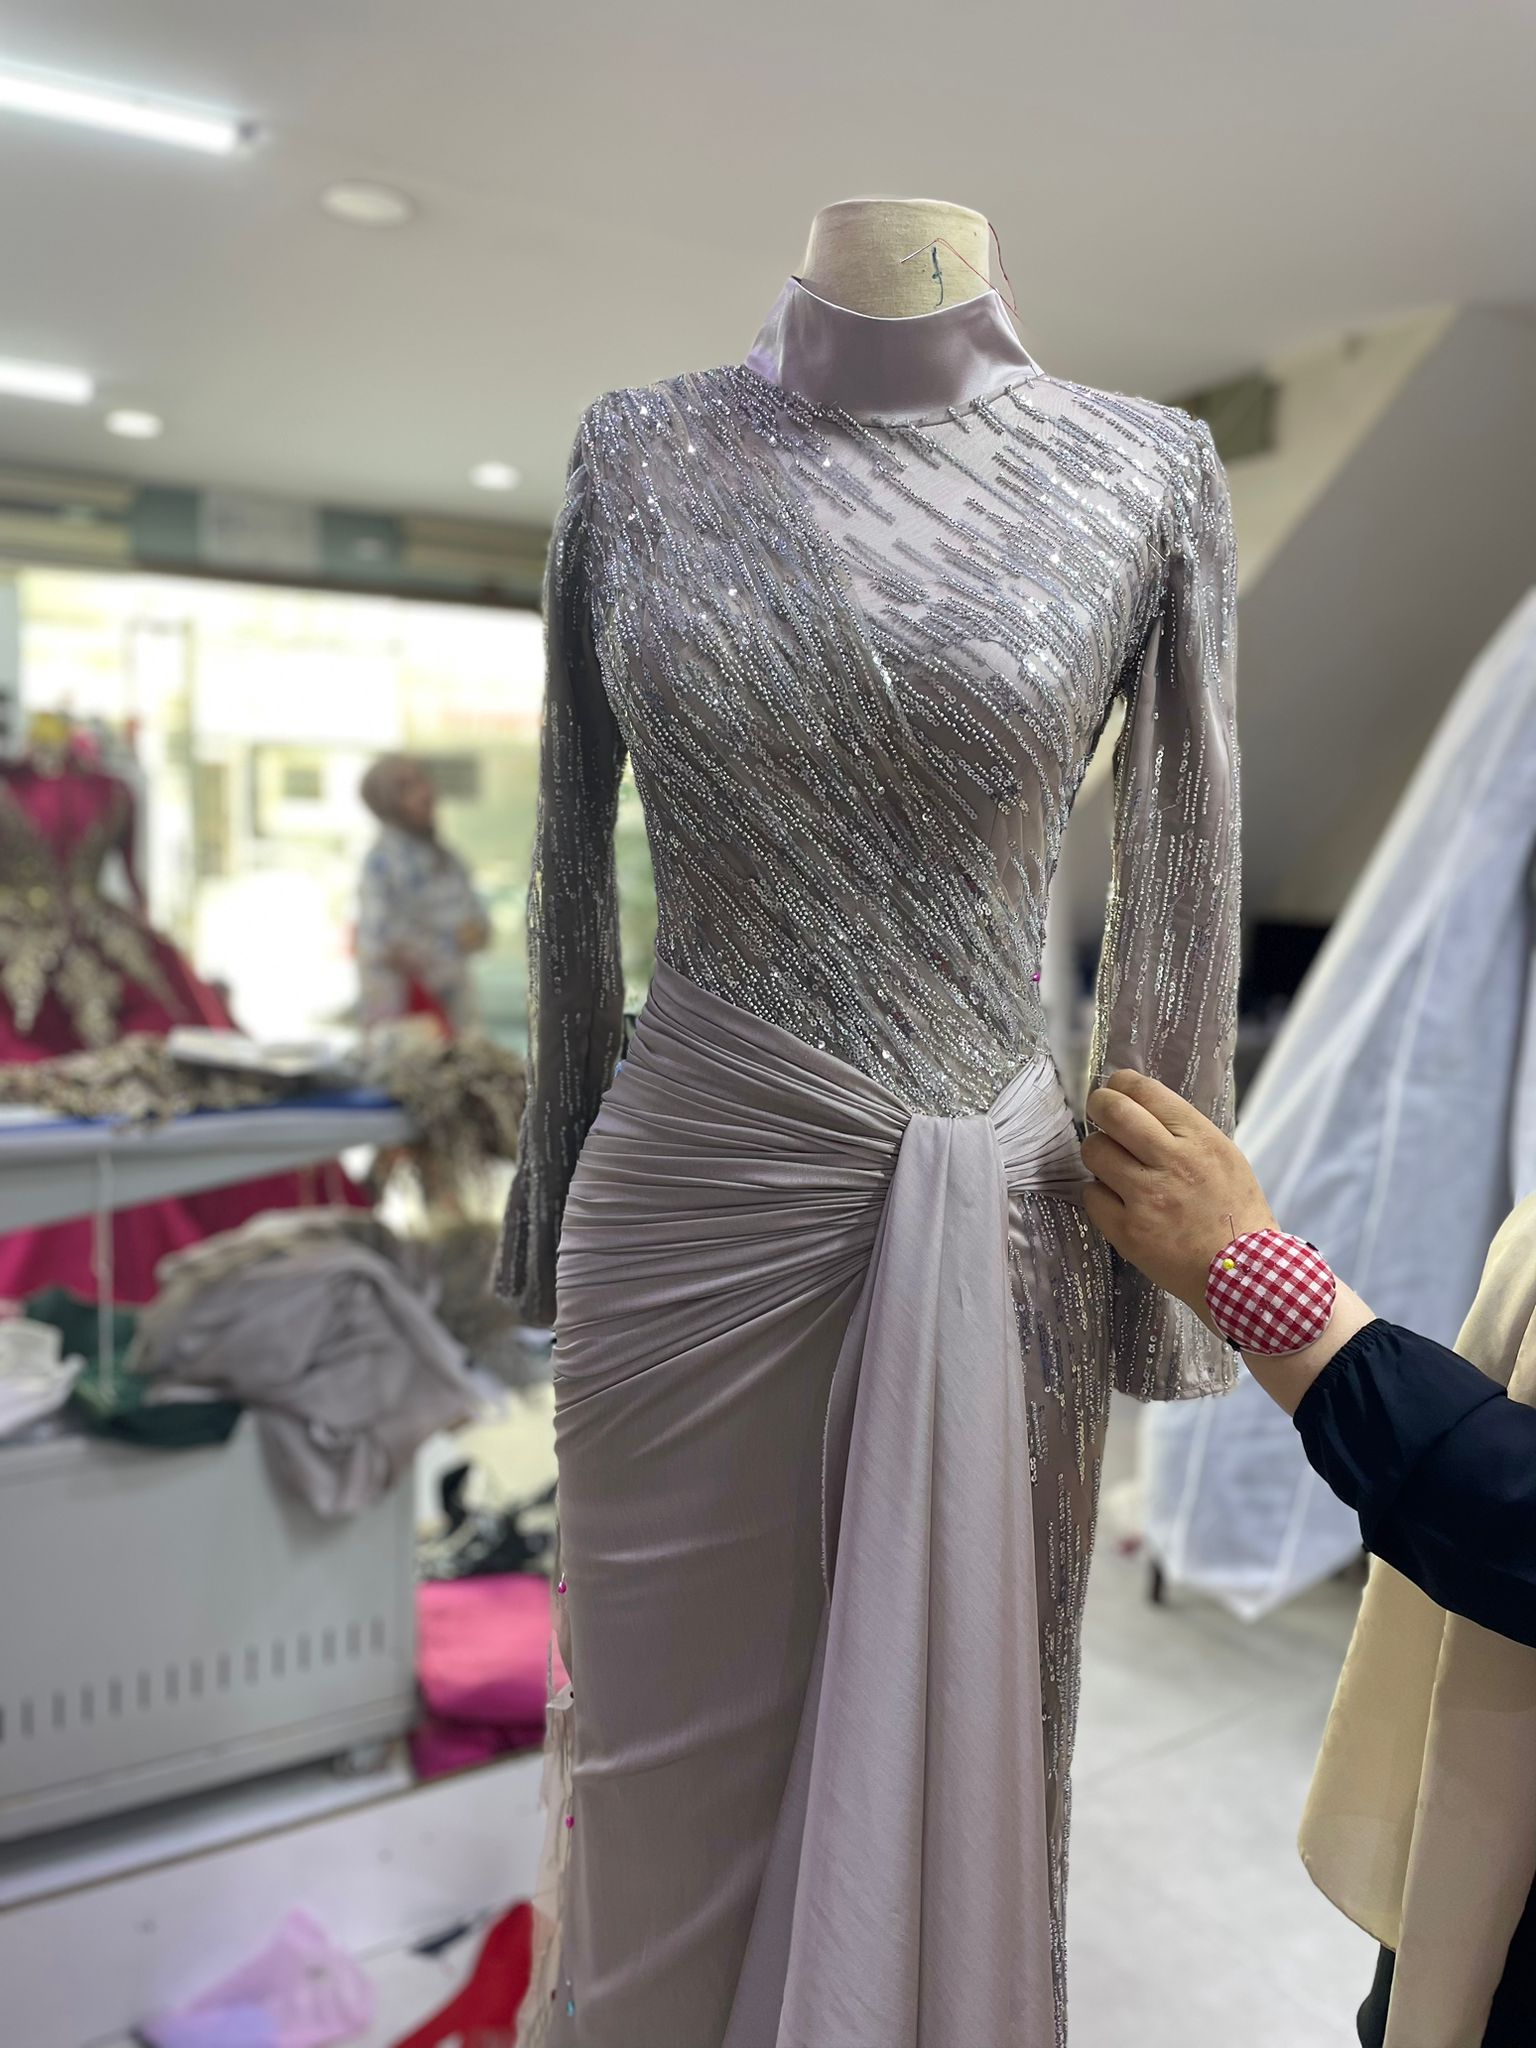 Benefits of Creating a Bespoke Dress